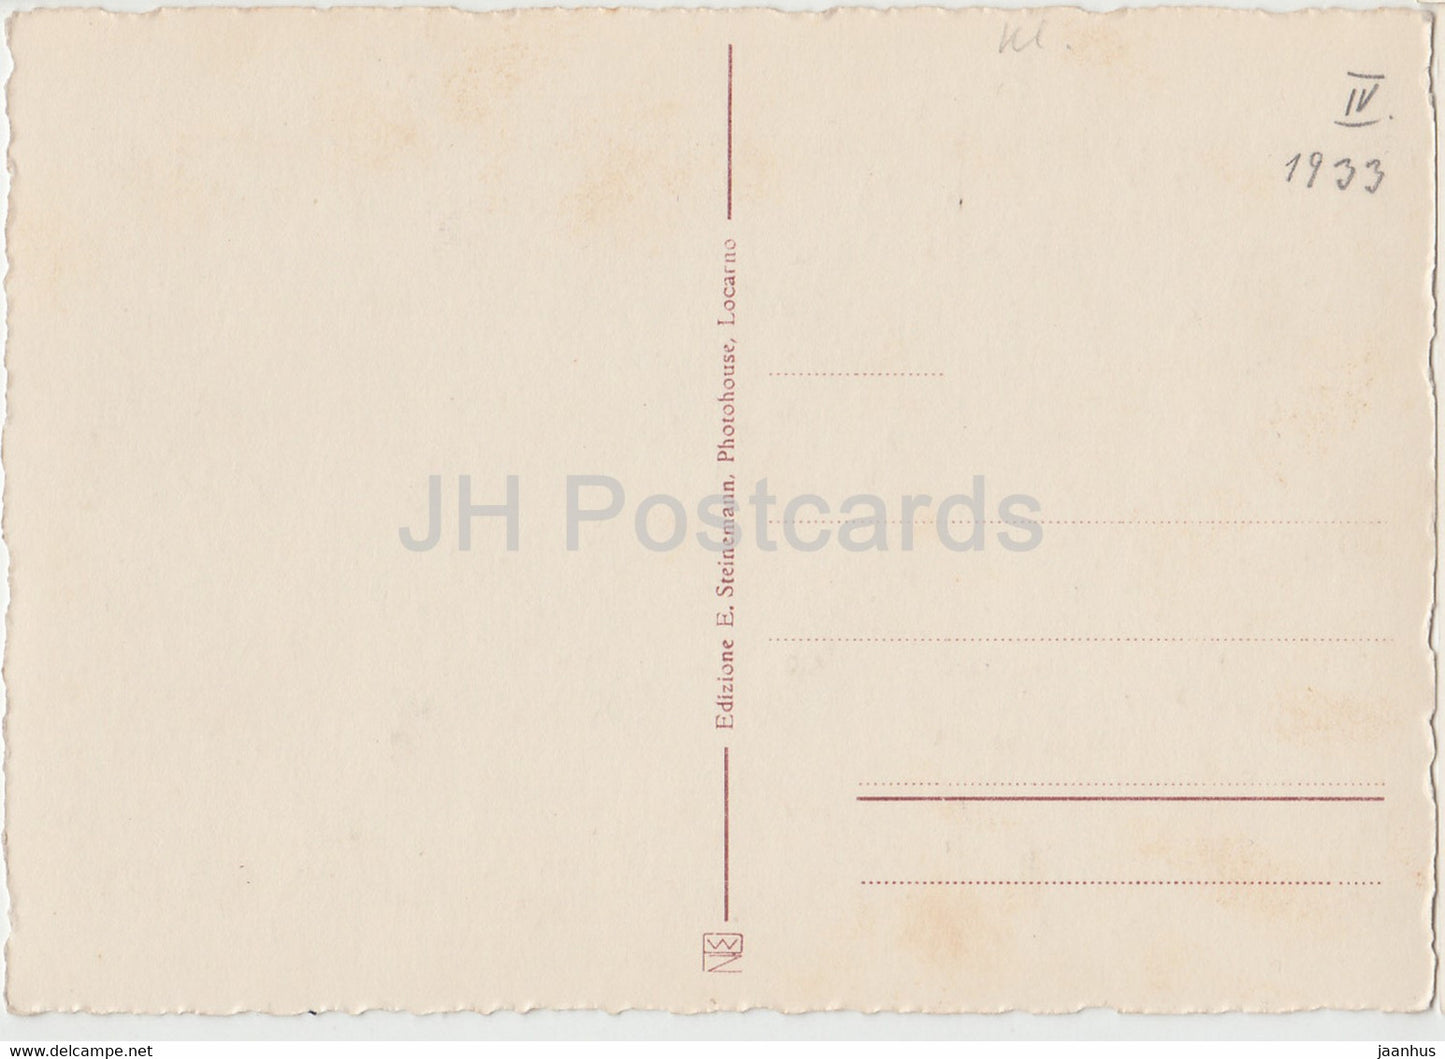 Locarno - Magnolie - 7159 - carte postale ancienne - 1933 - Suisse - inutilisée